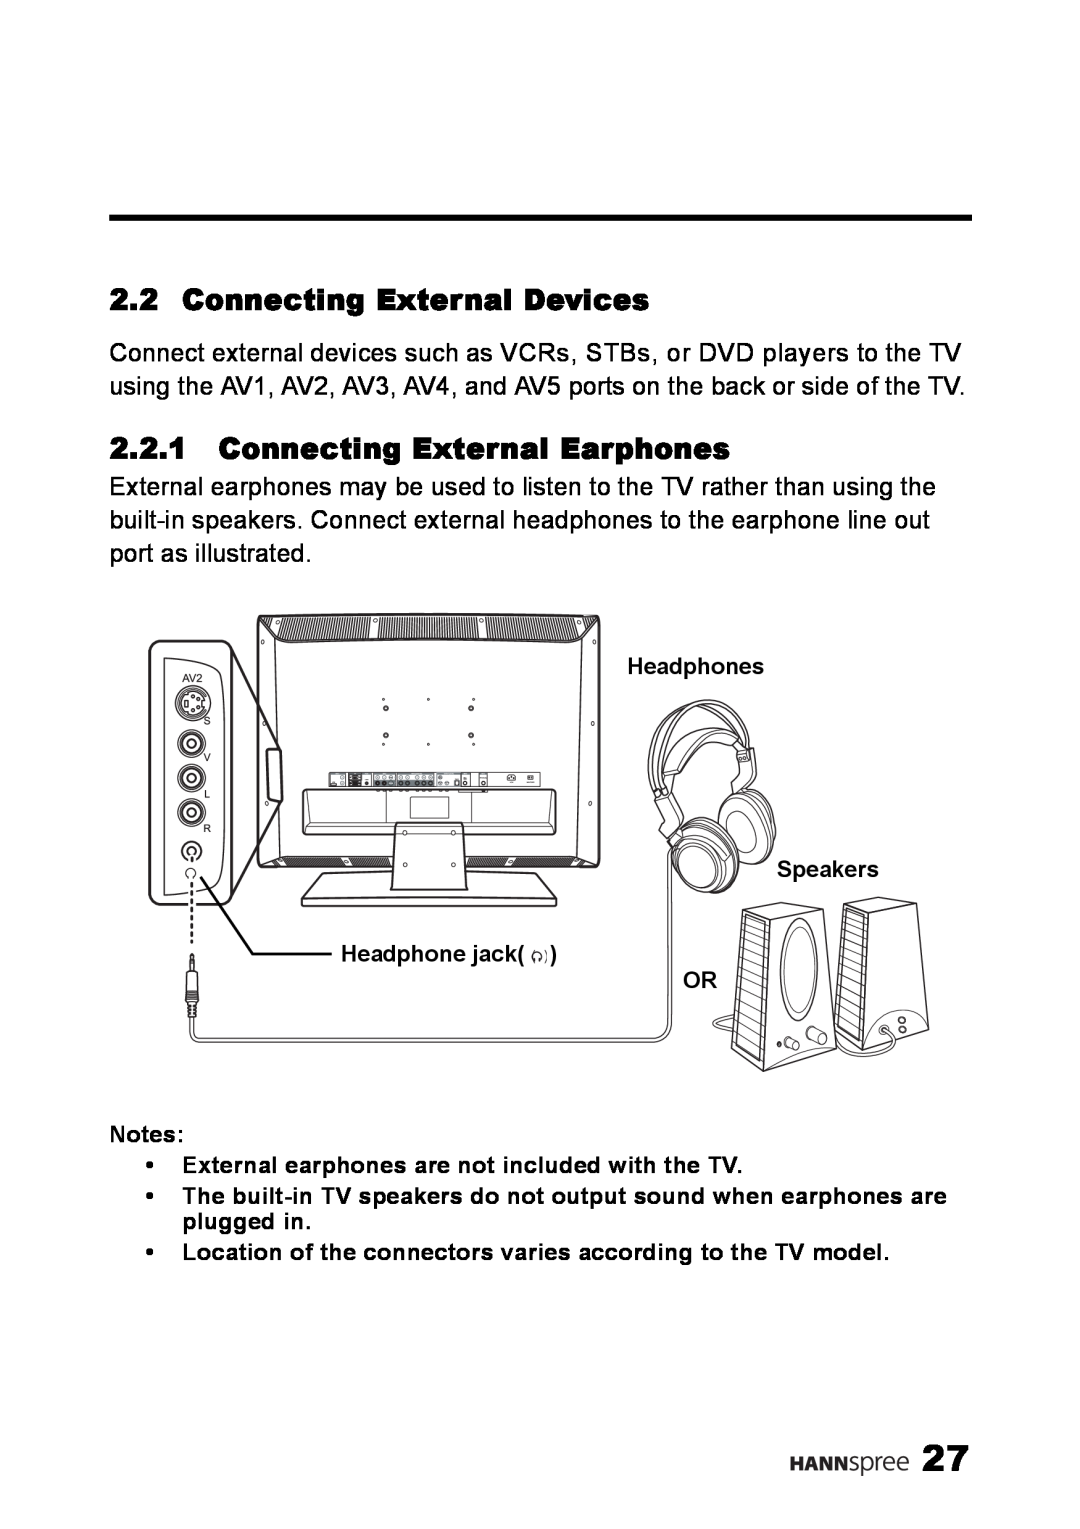 HANNspree MAK-000039 manual Connecting External Devices, Connecting External Earphones 